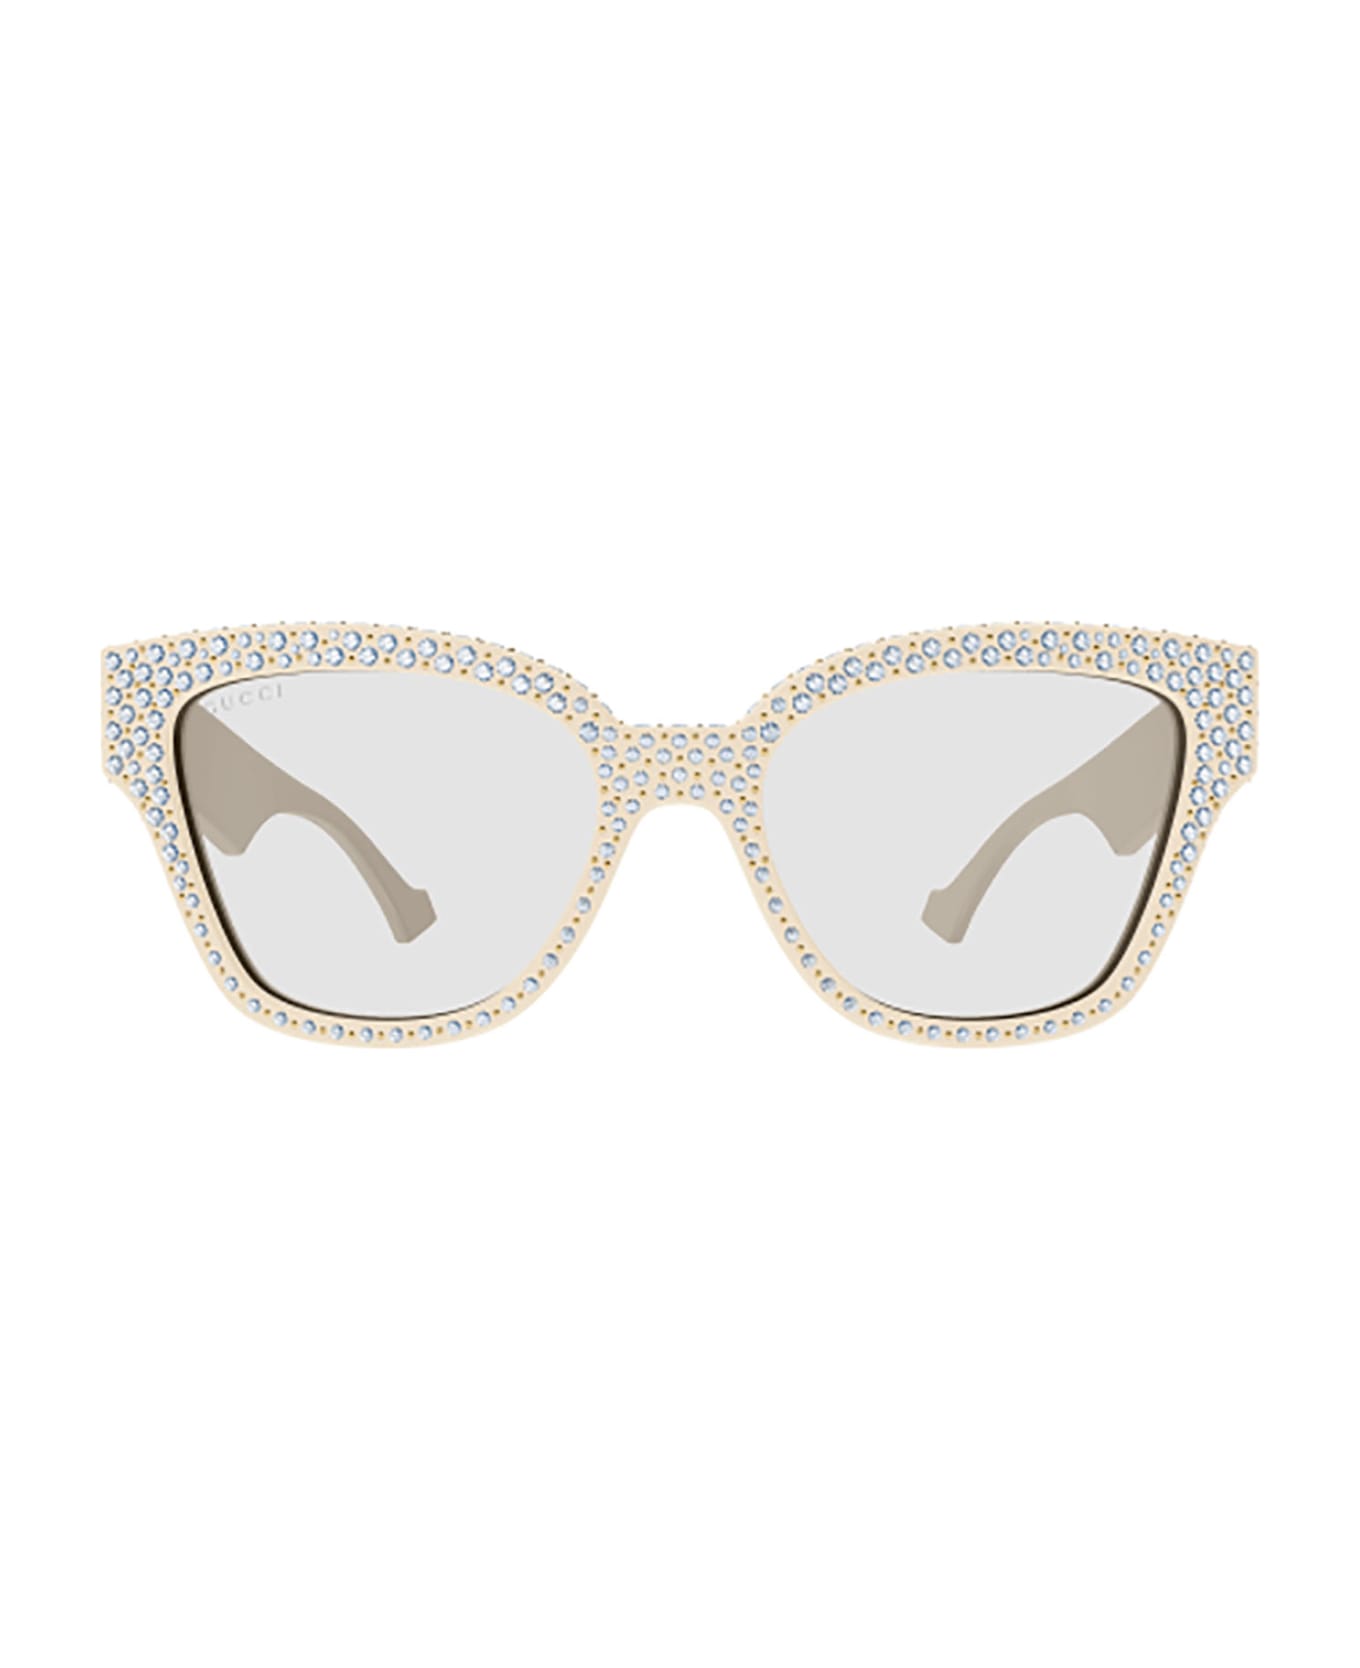 Gucci Eyewear GG1424S Sunglasses - Ivory Ivory Transpare サングラス